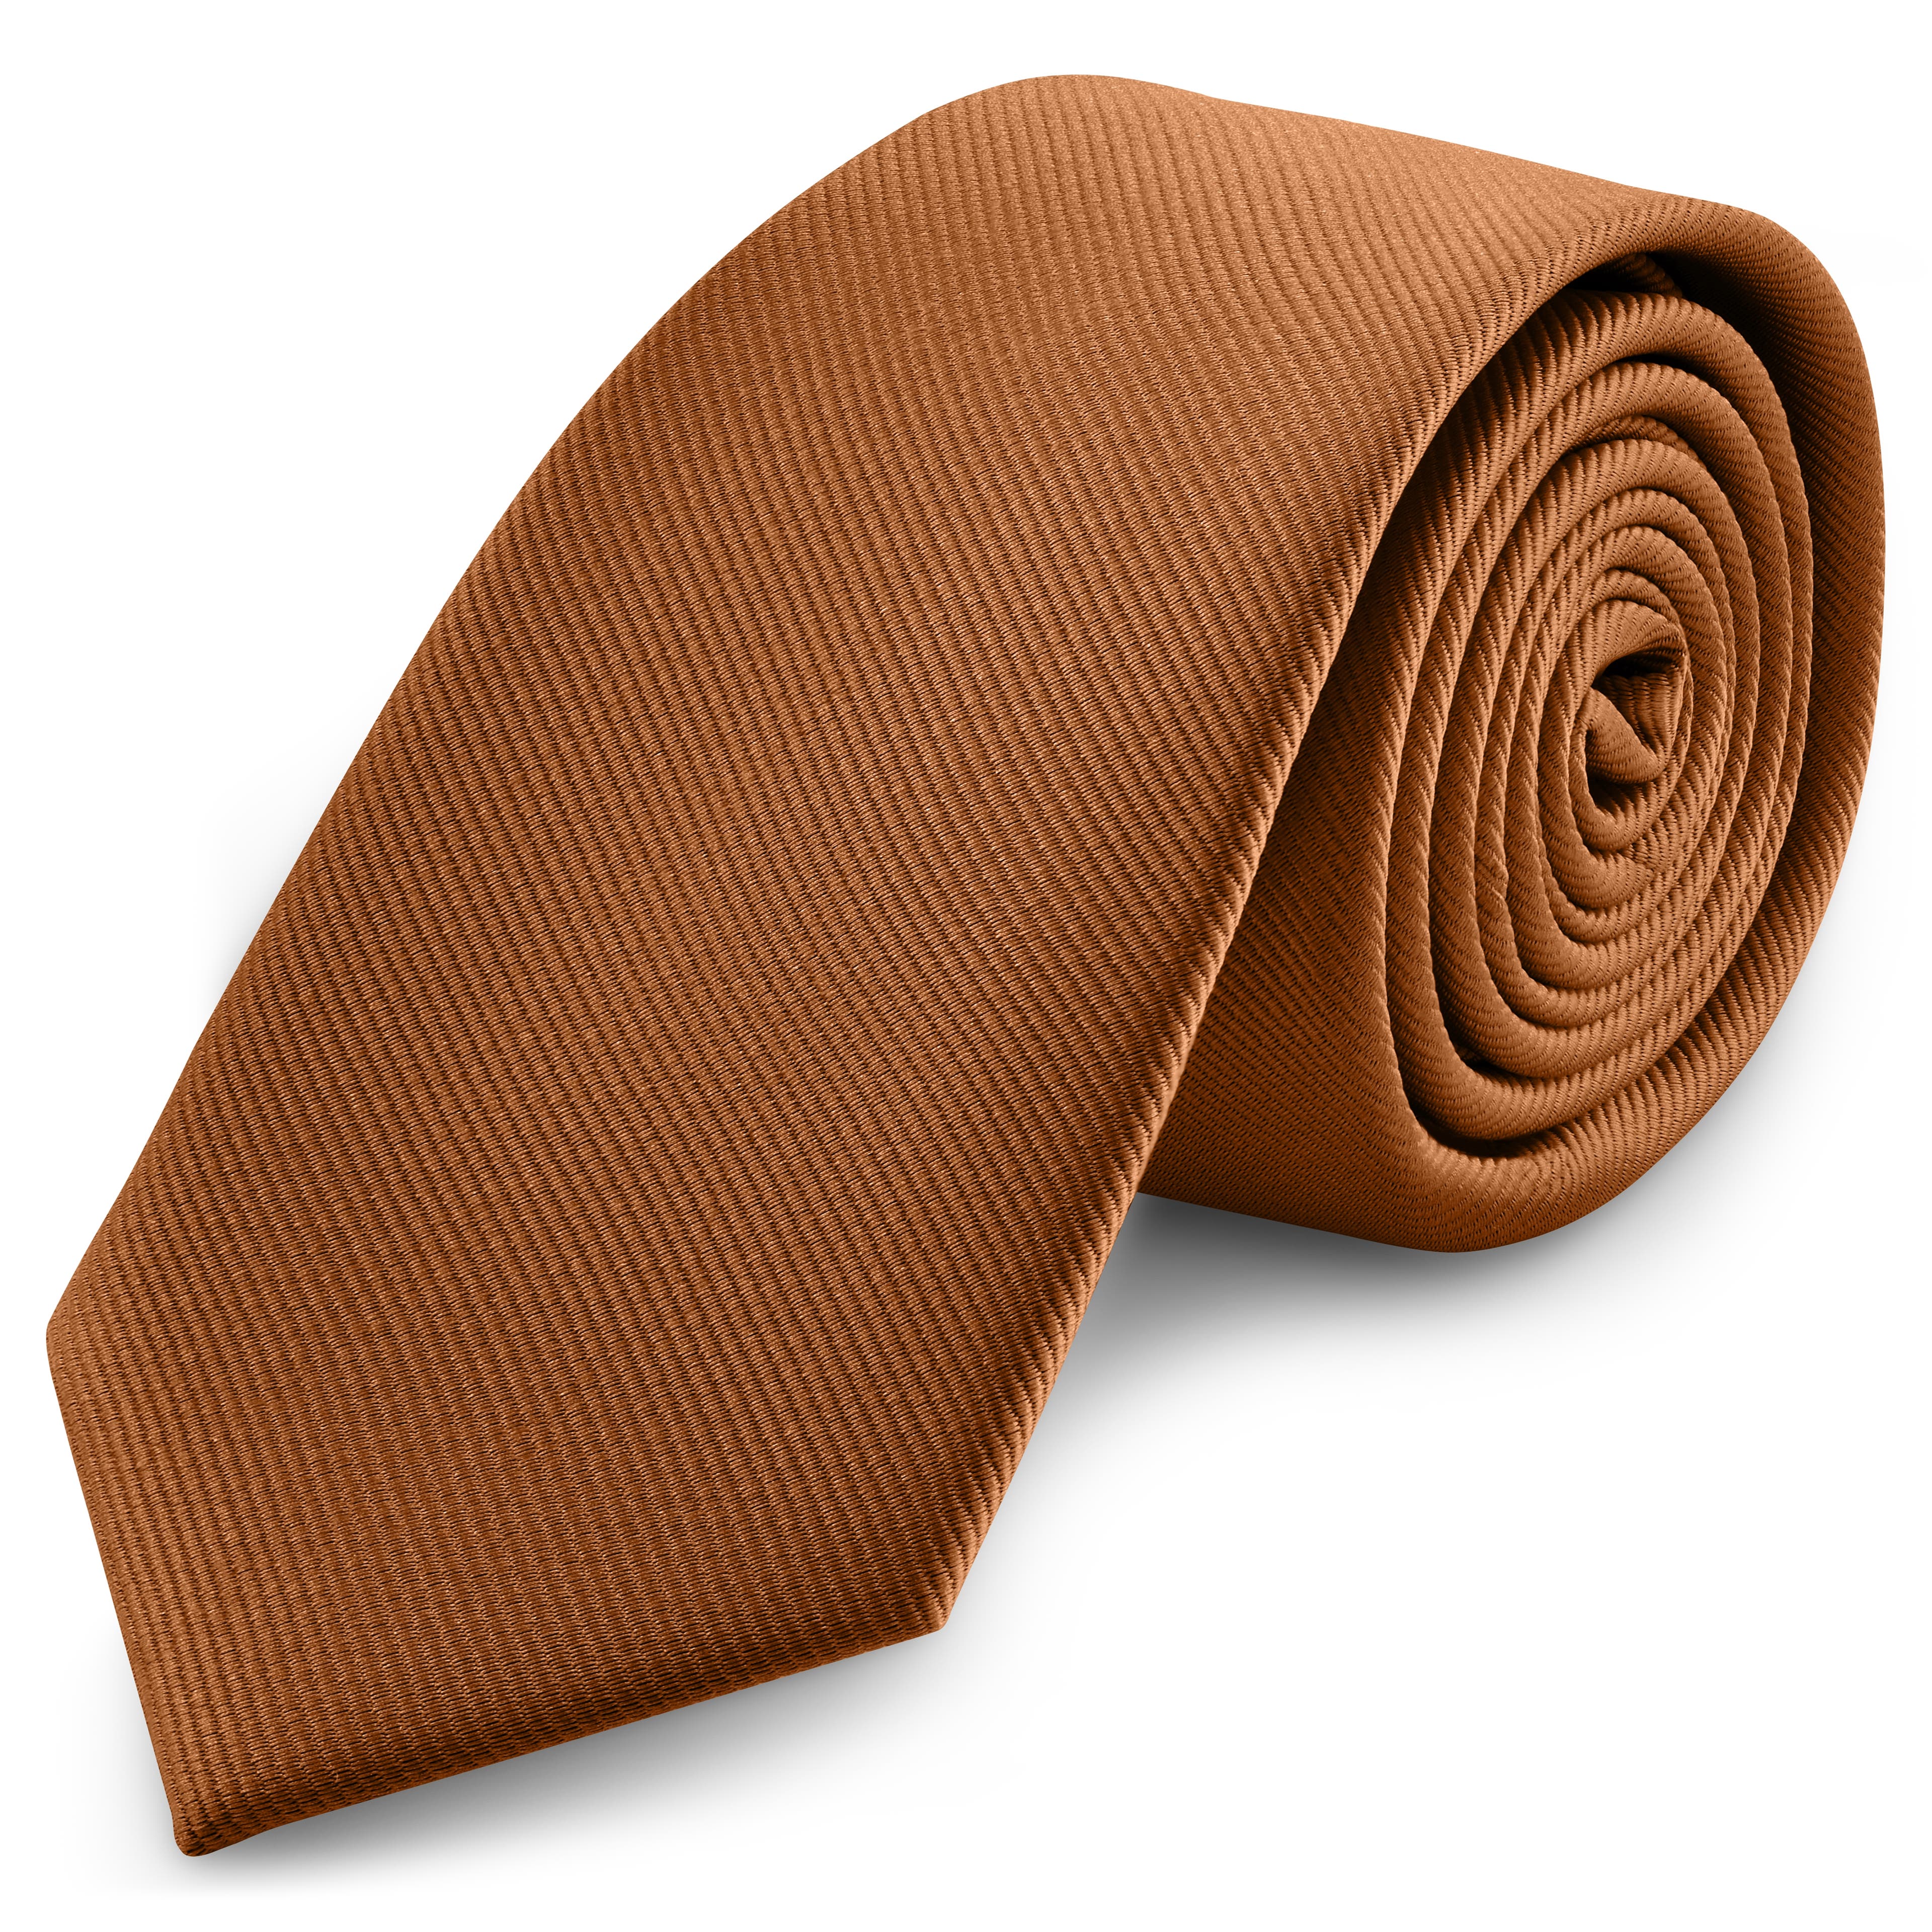 8 cm Rostfarbene Grosgrain Krawatte